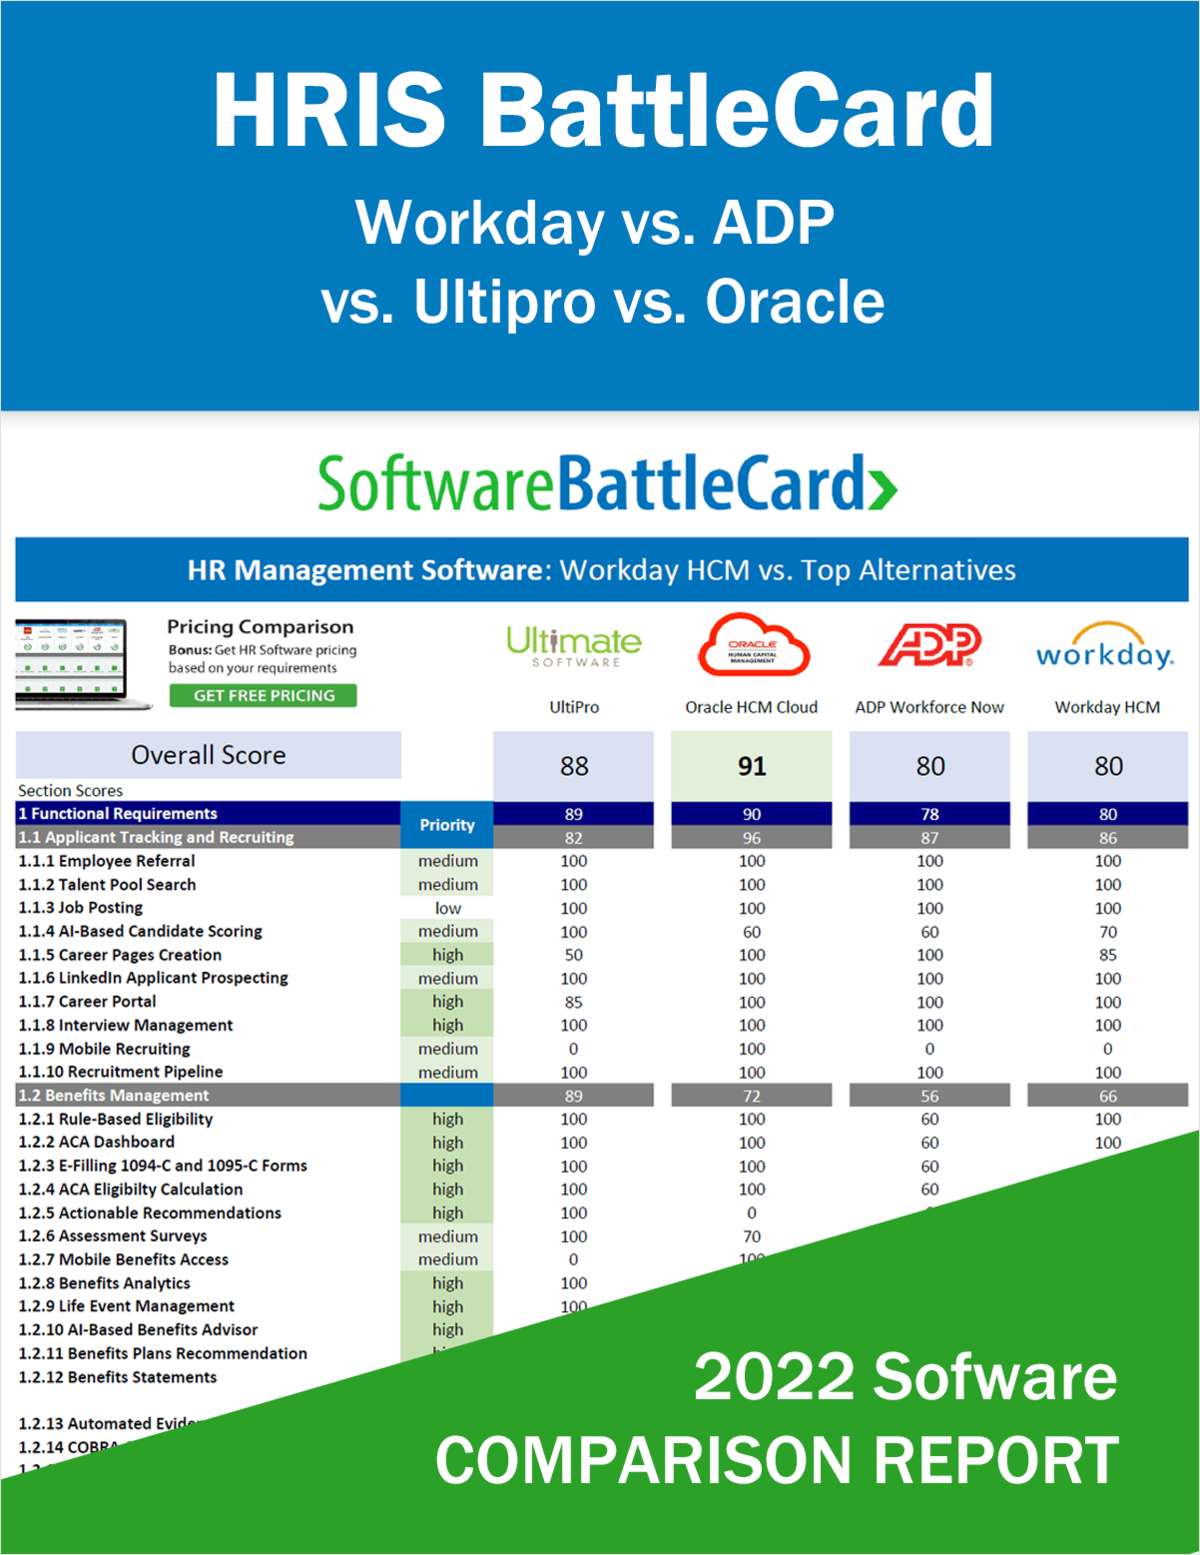 HRIS BattleCard--Workday HCM vs. ADP Workforce Now vs. Ultipro vs. Oracle HCM Cloud